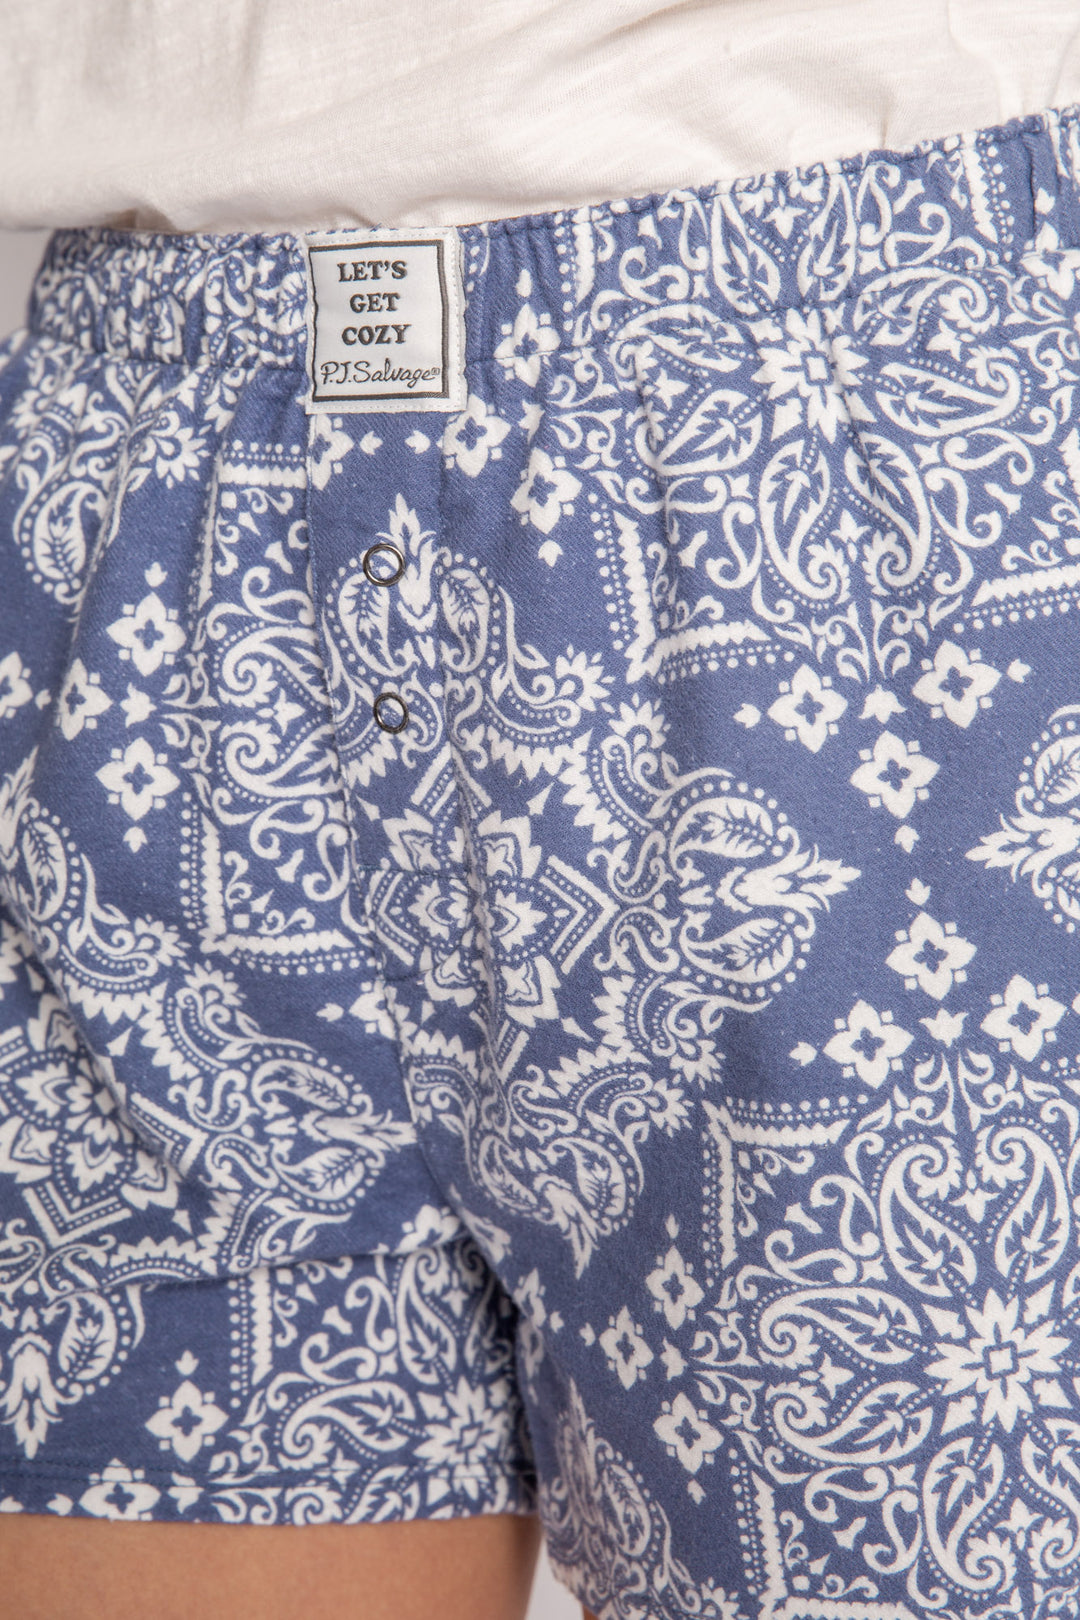 Cotton flannel pj boxer short in blue-white bandana print. Faux snap fly. (7231870730340)